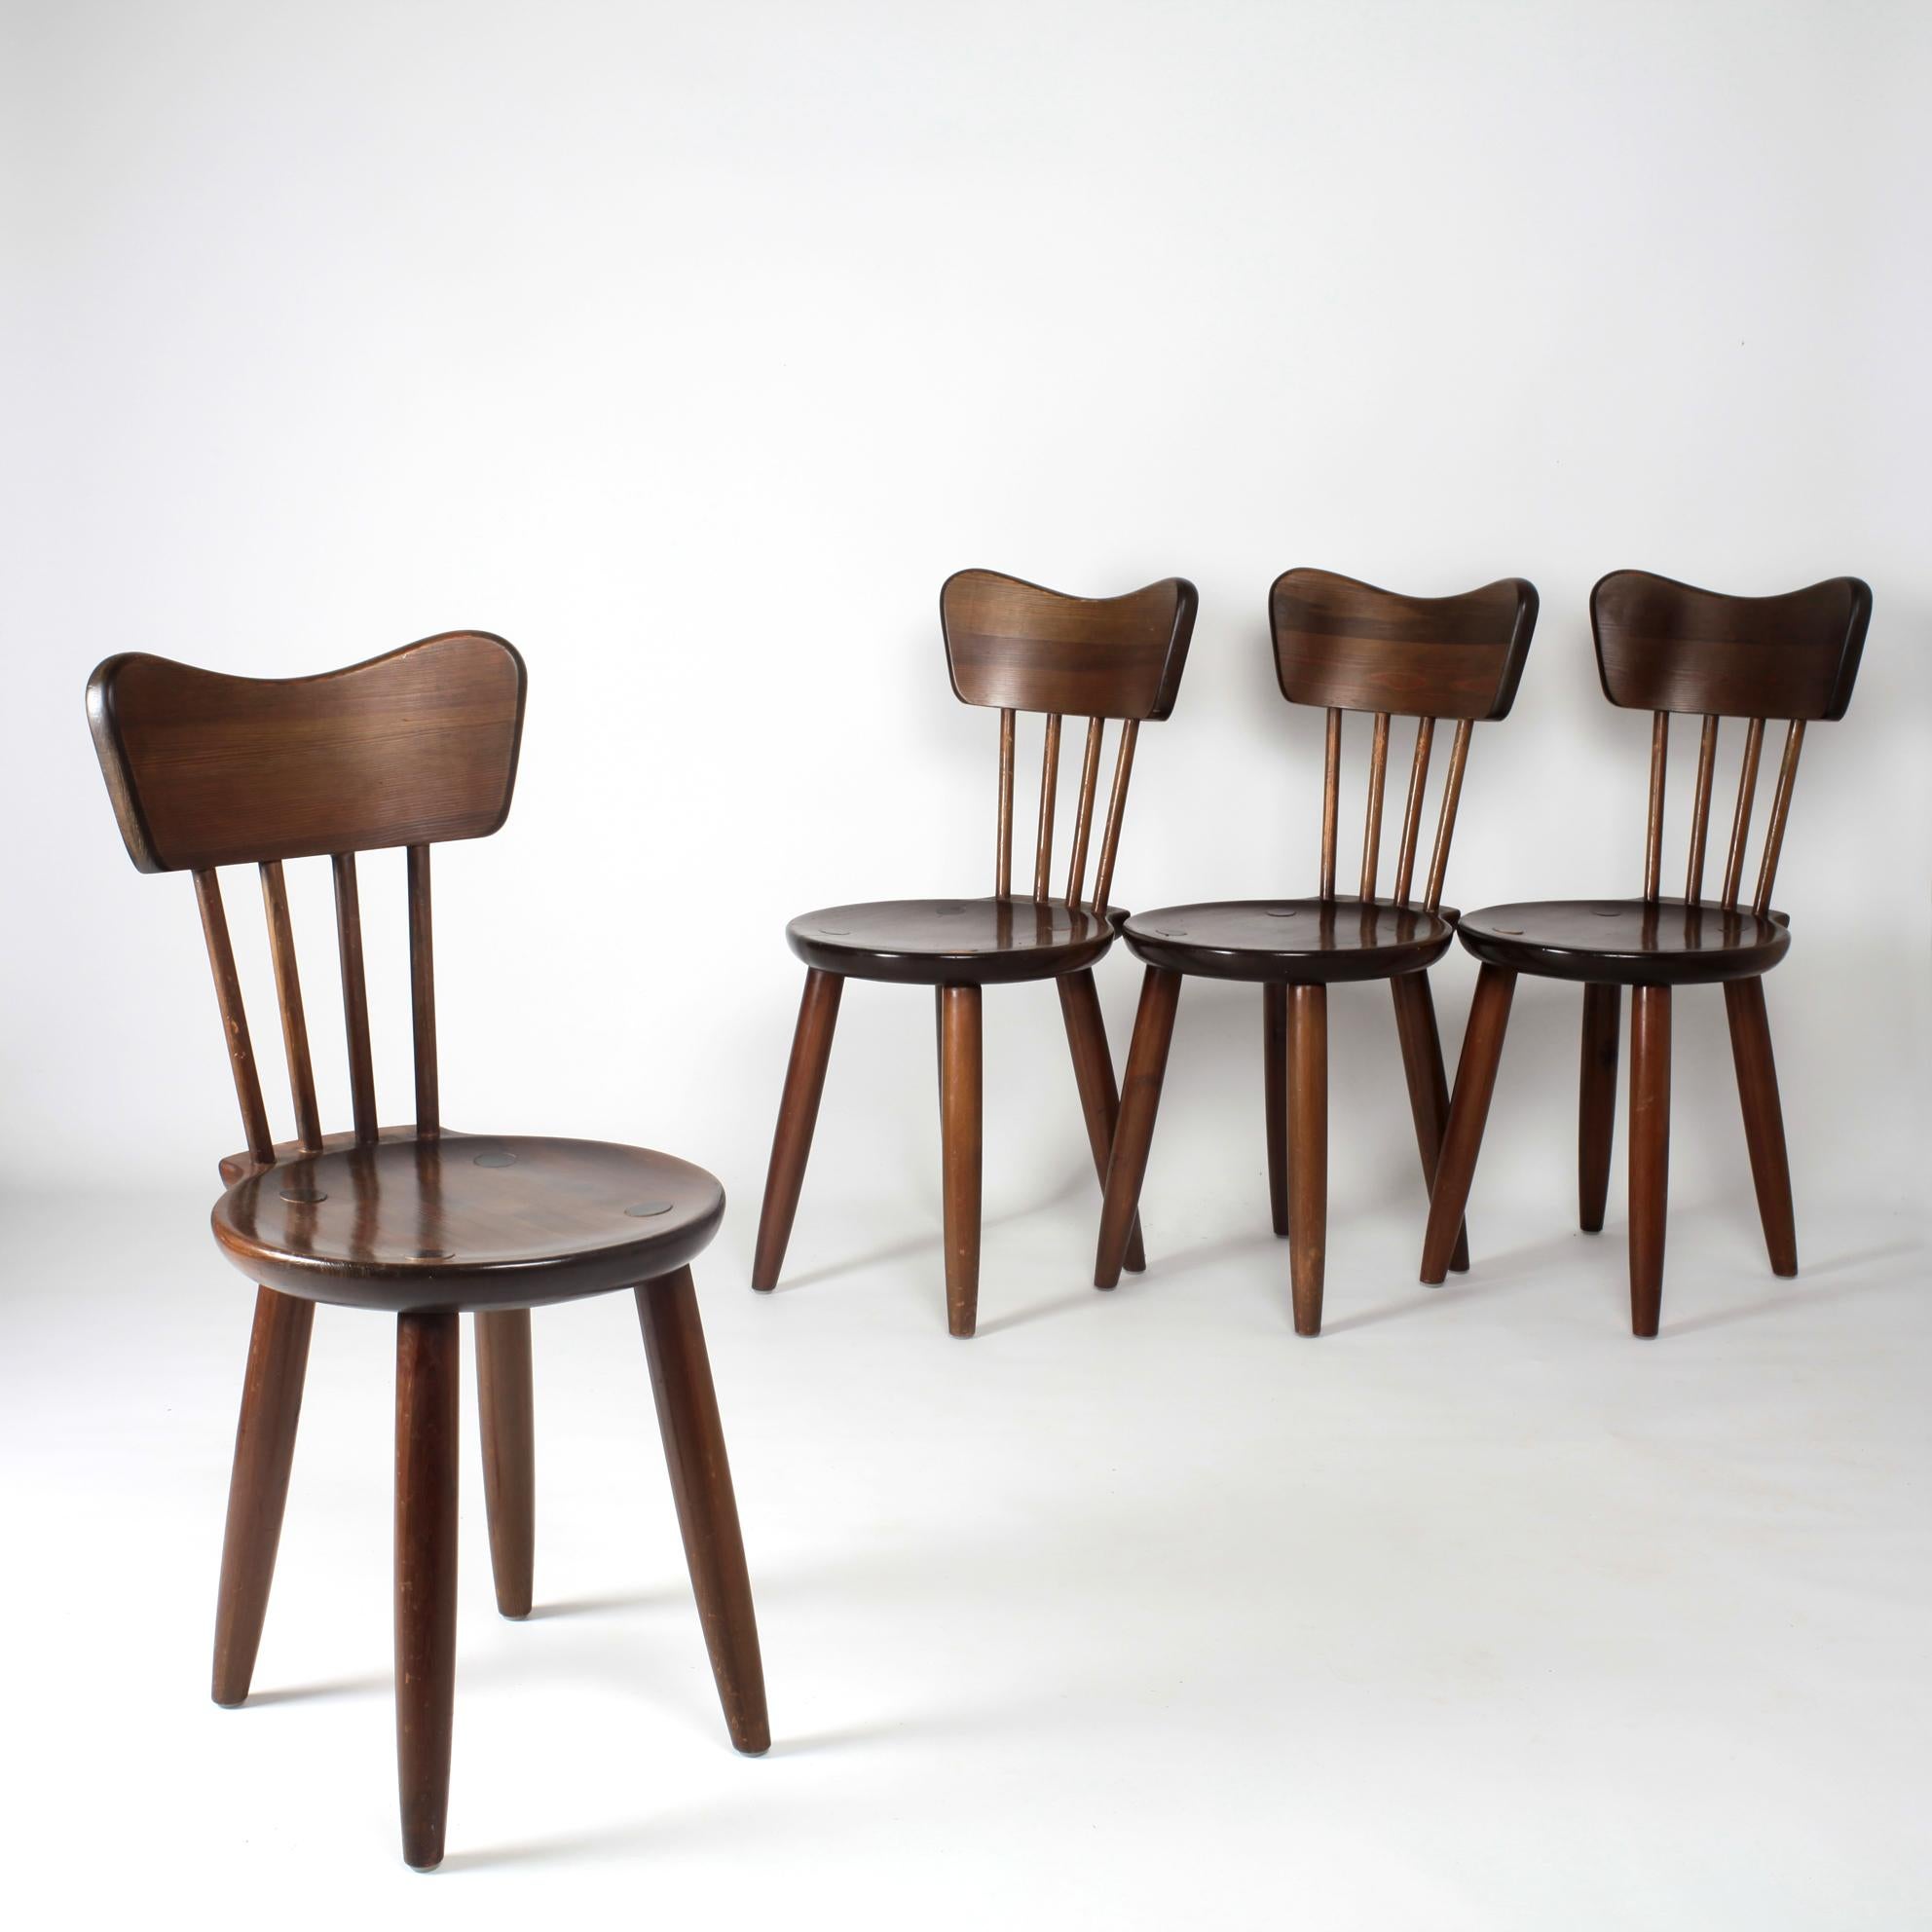 Set of 4 stained pine wood dining chairs by Torsten Claeson for Steneby Hemslöjdsförening, 1930, Sweden.
Original nice patina.